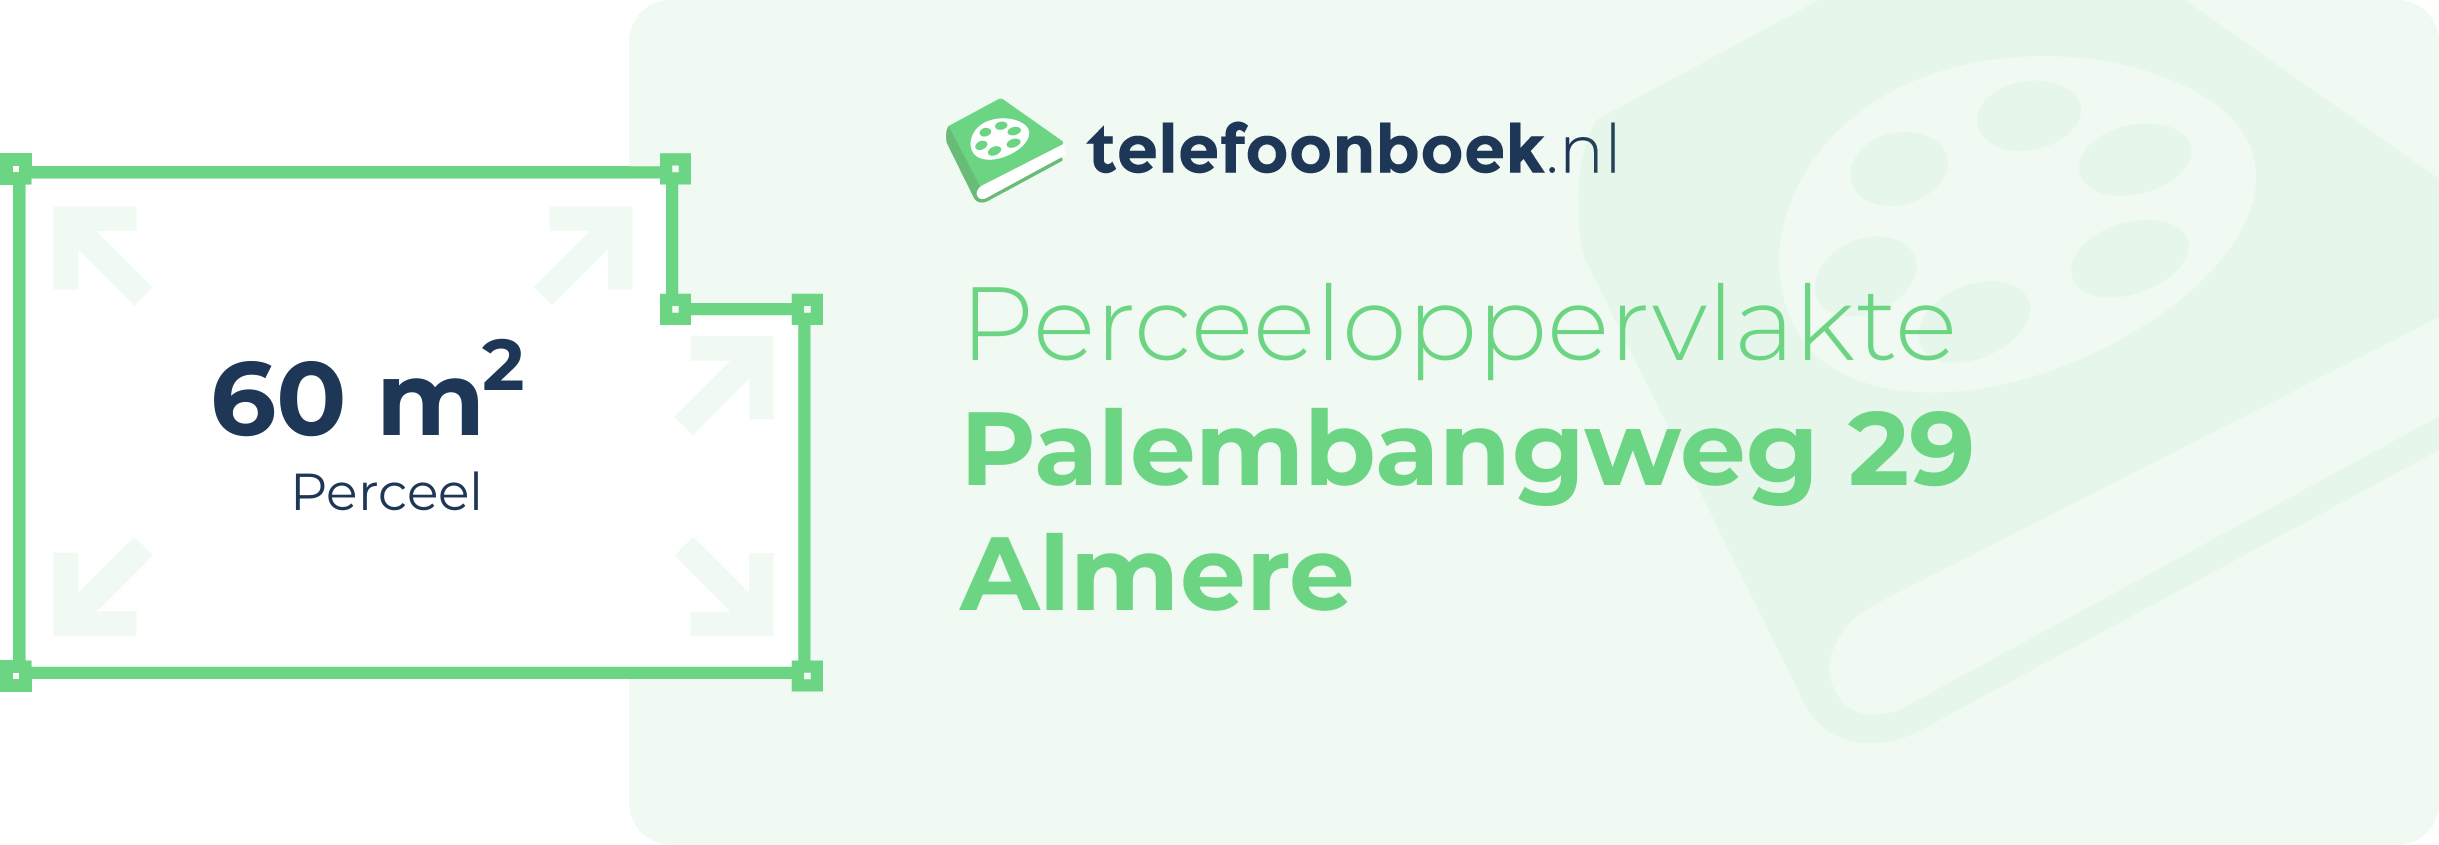 Perceeloppervlakte Palembangweg 29 Almere